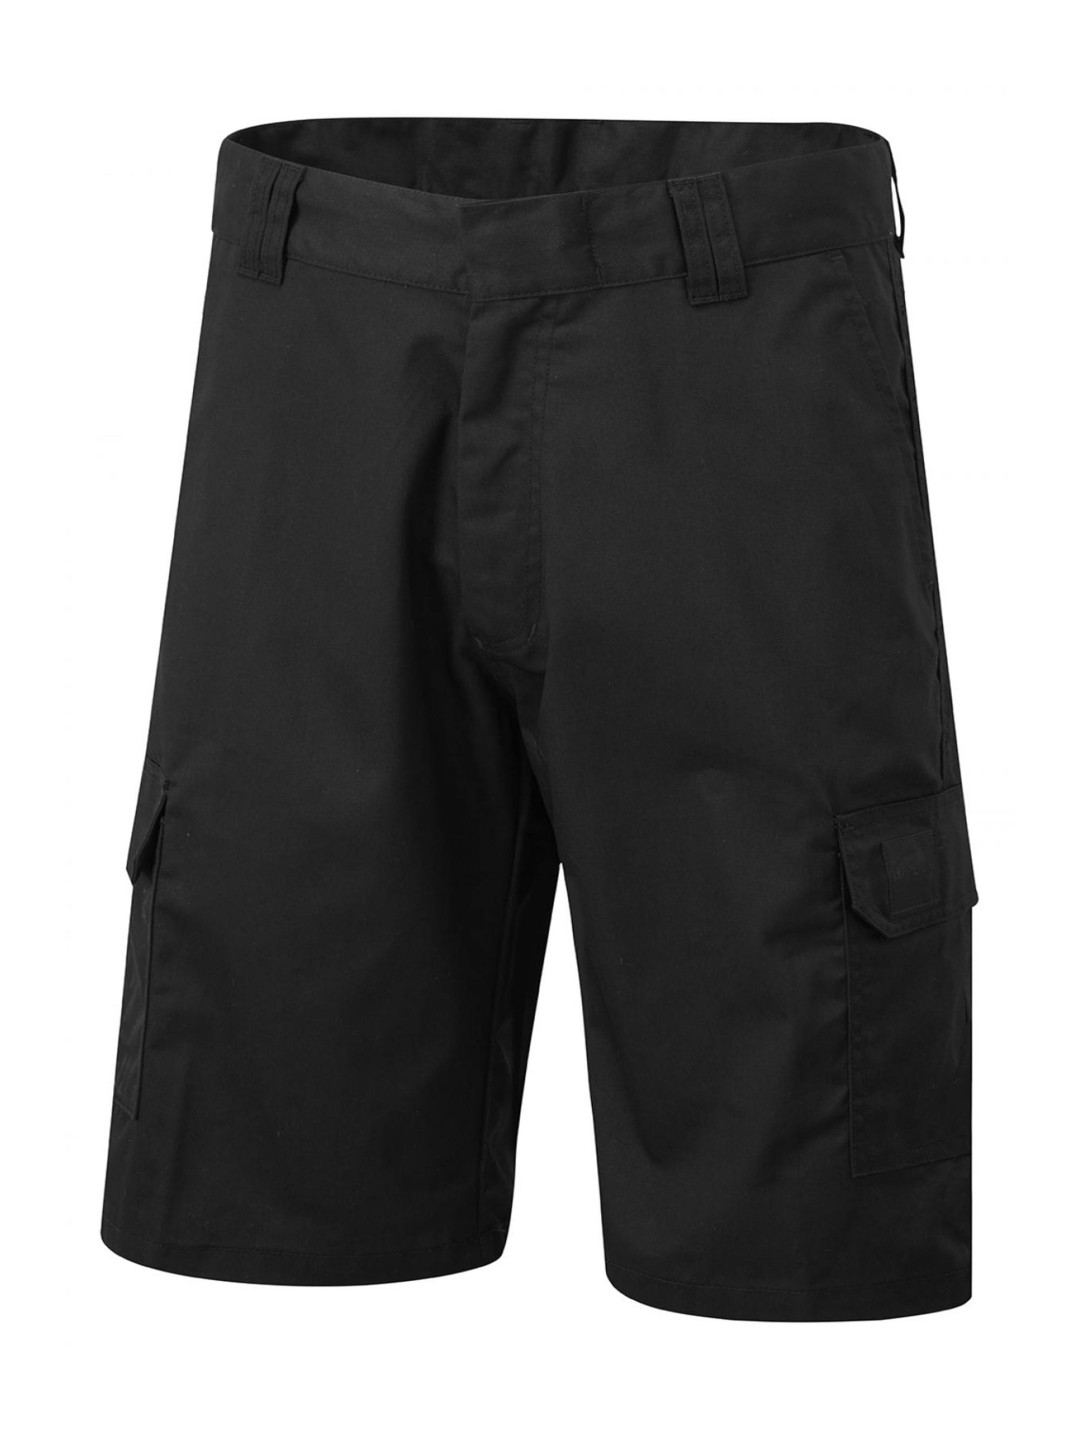 Uneek Men's Cargo Shorts - Industrial Workwear